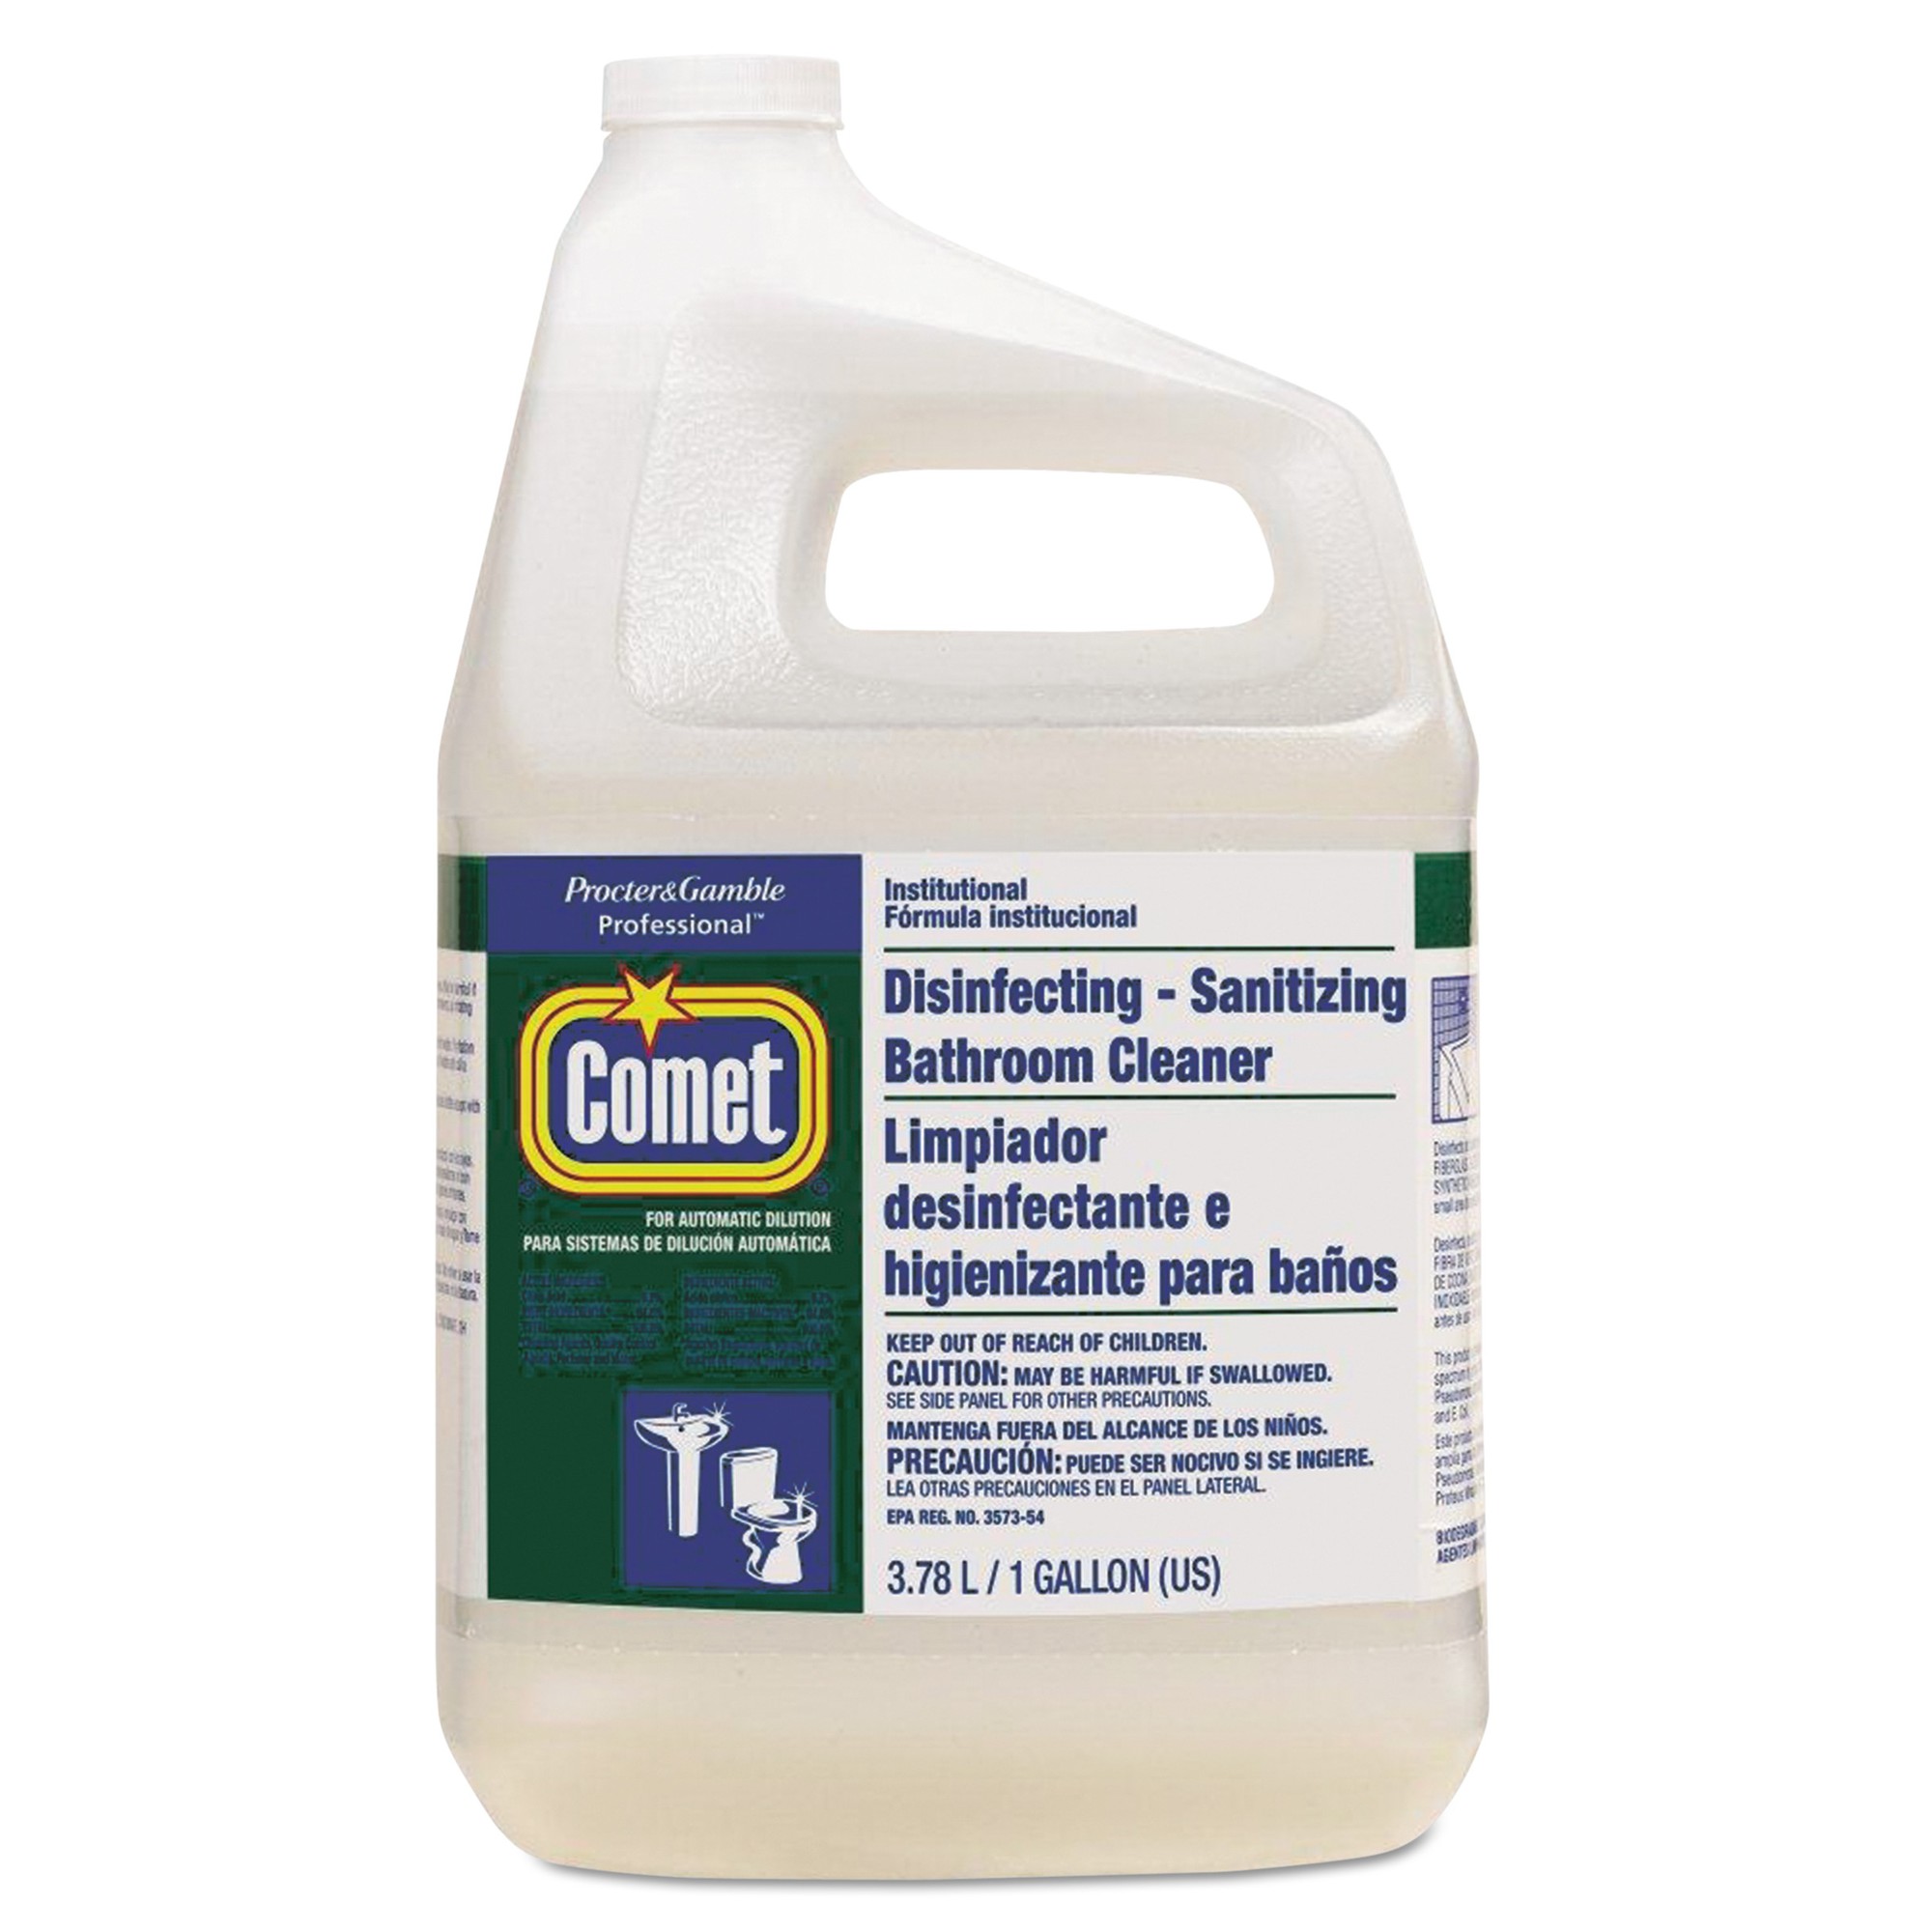 Disinfecting-Sanitizing Bathroom Cleaner, One Gallon Bottle